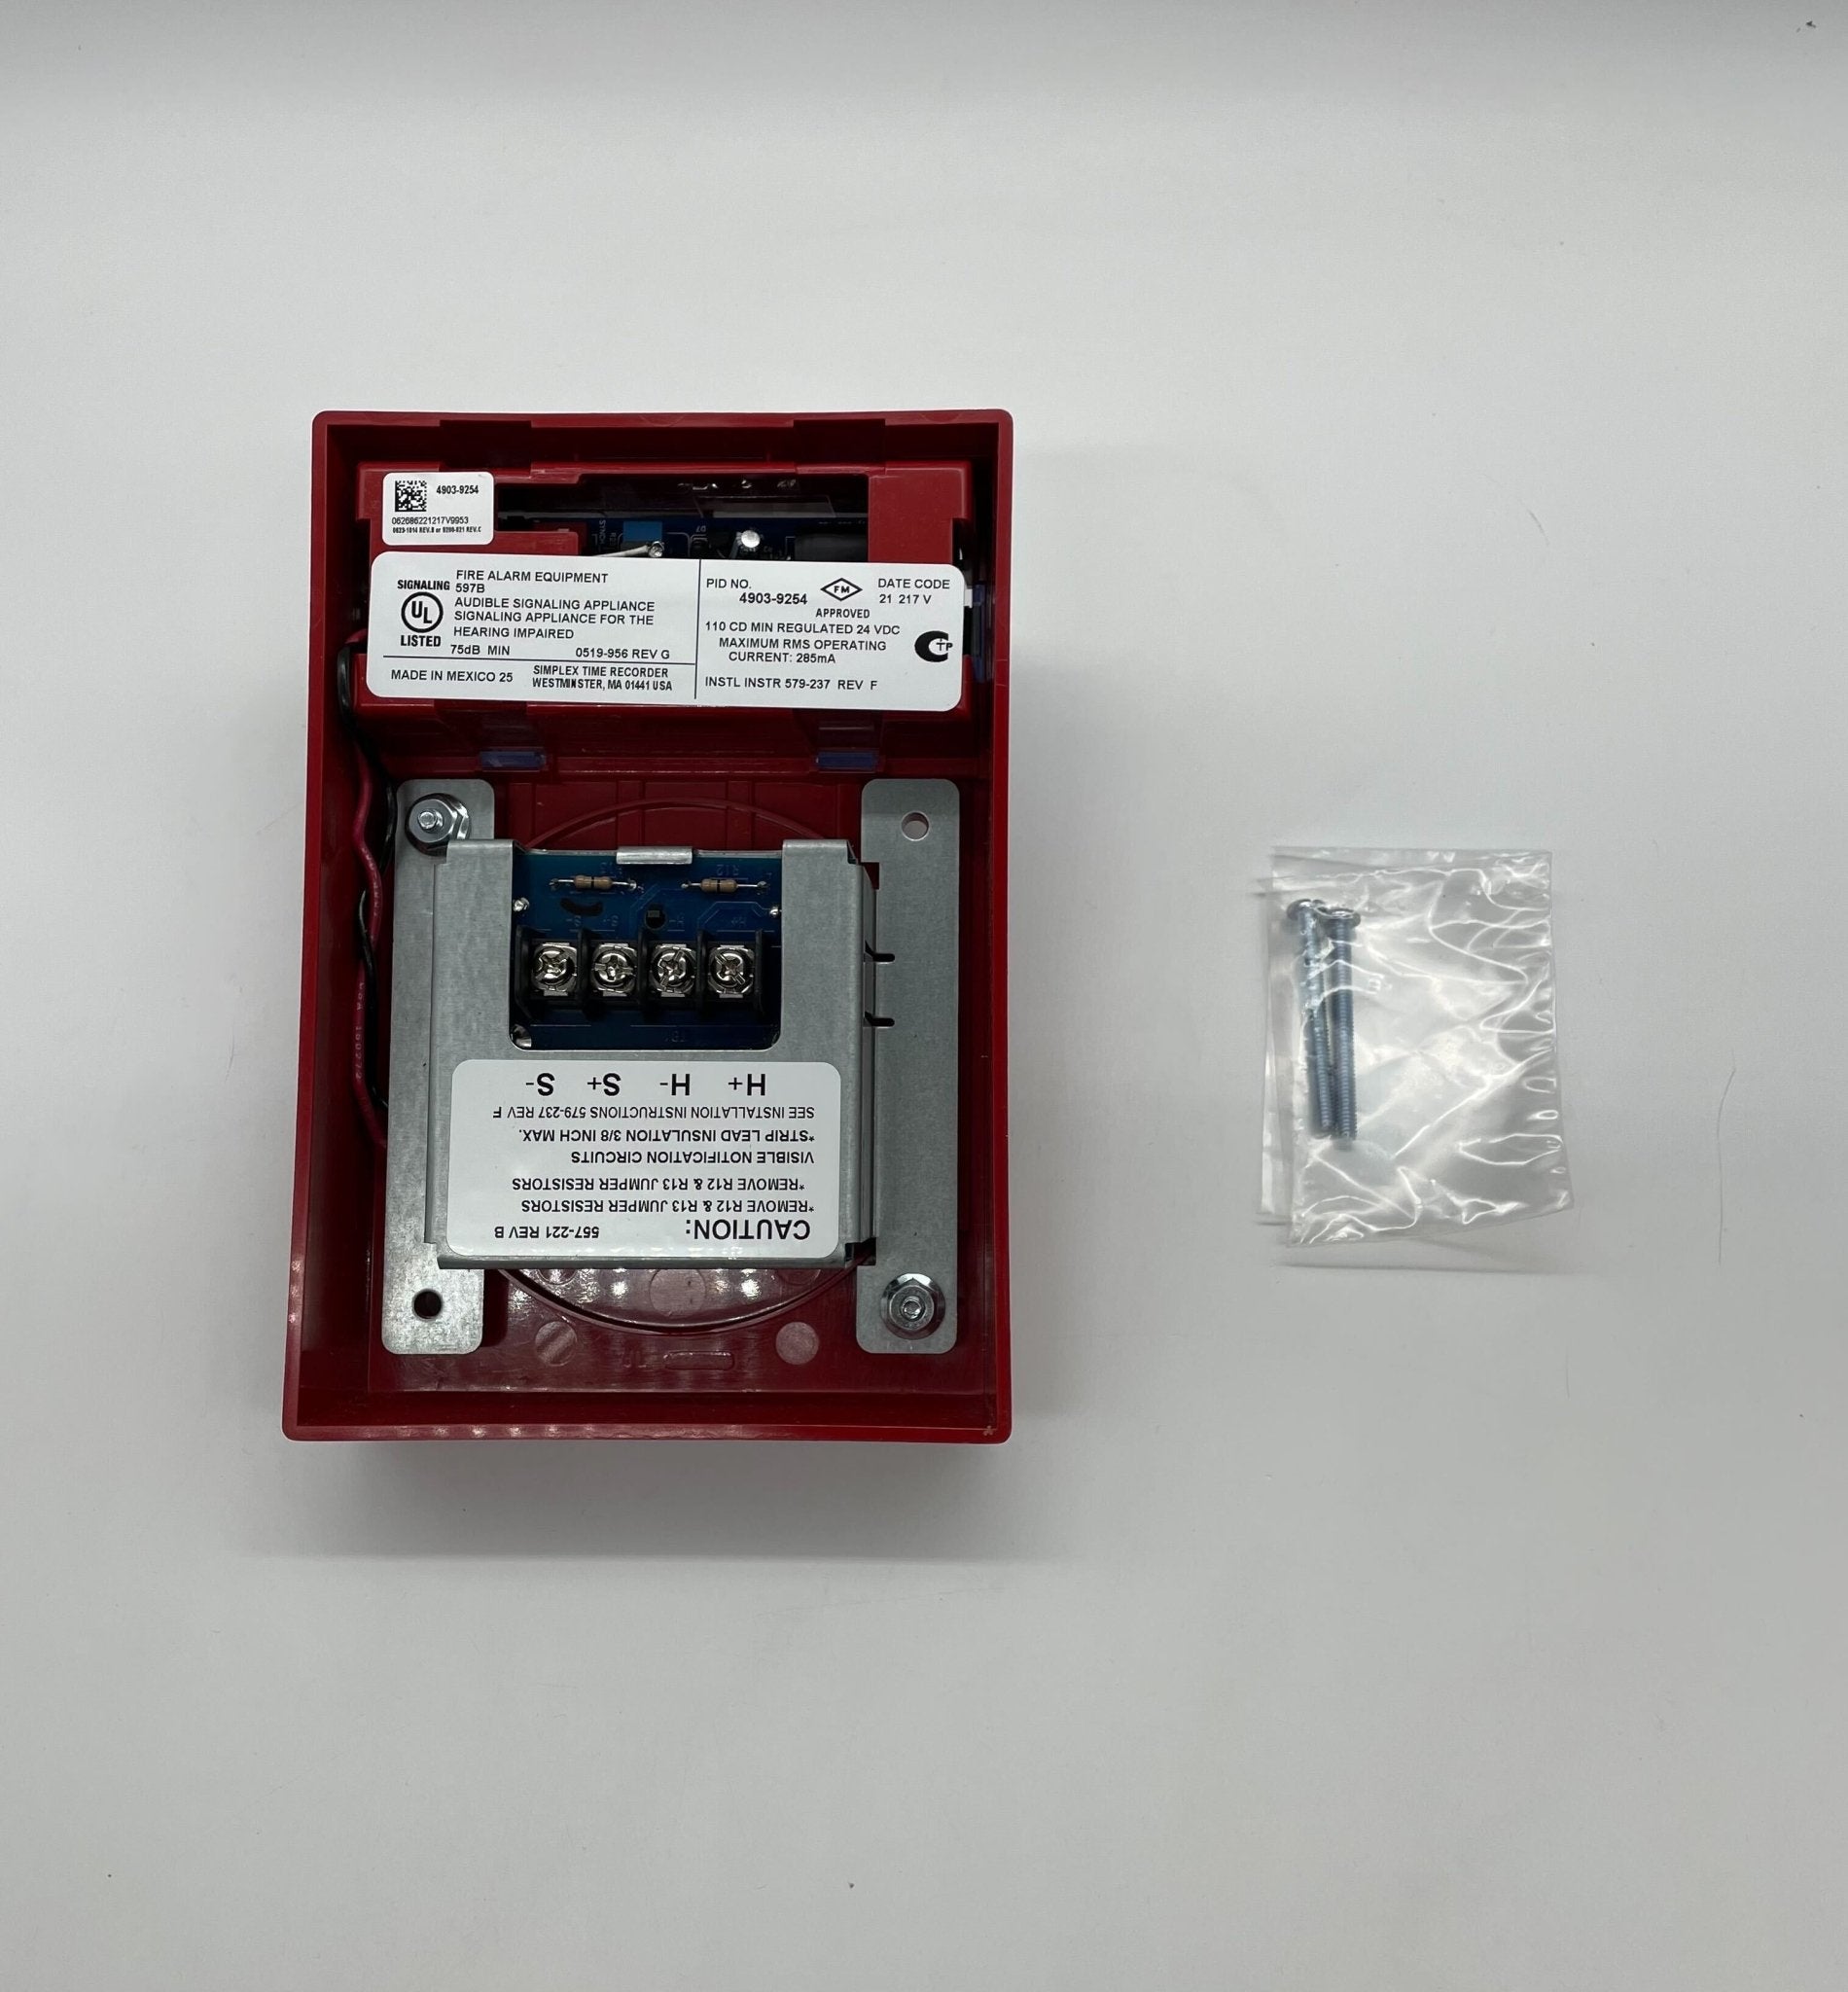 Simplex 4903-9254 Horn Strobe - The Fire Alarm Supplier